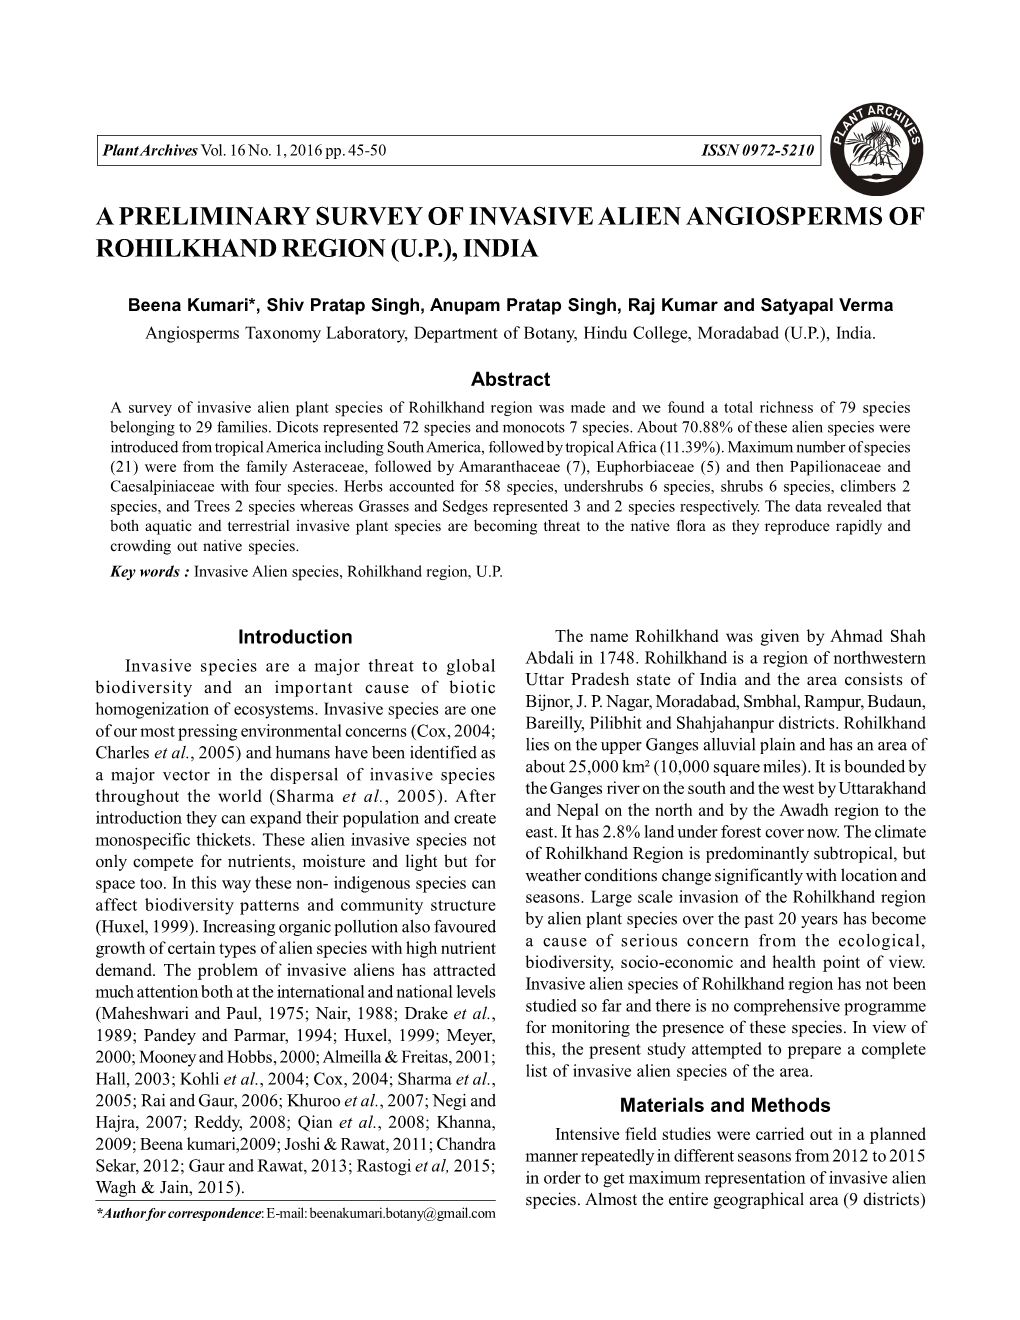 A Preliminary Survey of Invasive Alien Angiosperms of Rohilkhand Region (U.P.), India